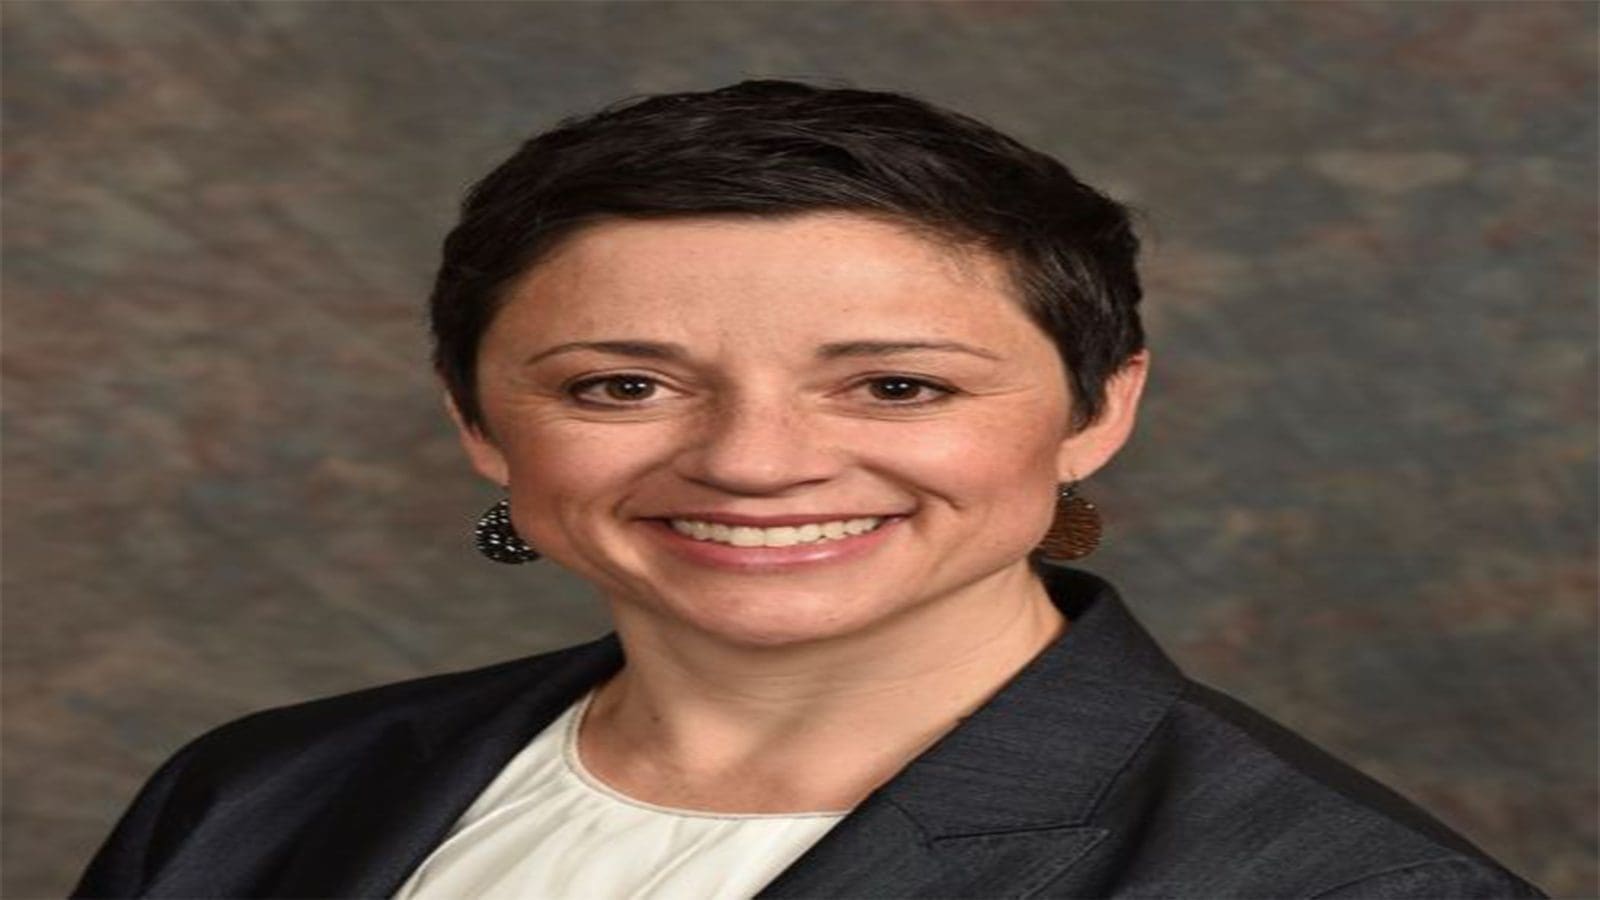 FMI appoints Carey Allen to lead food safety certification program